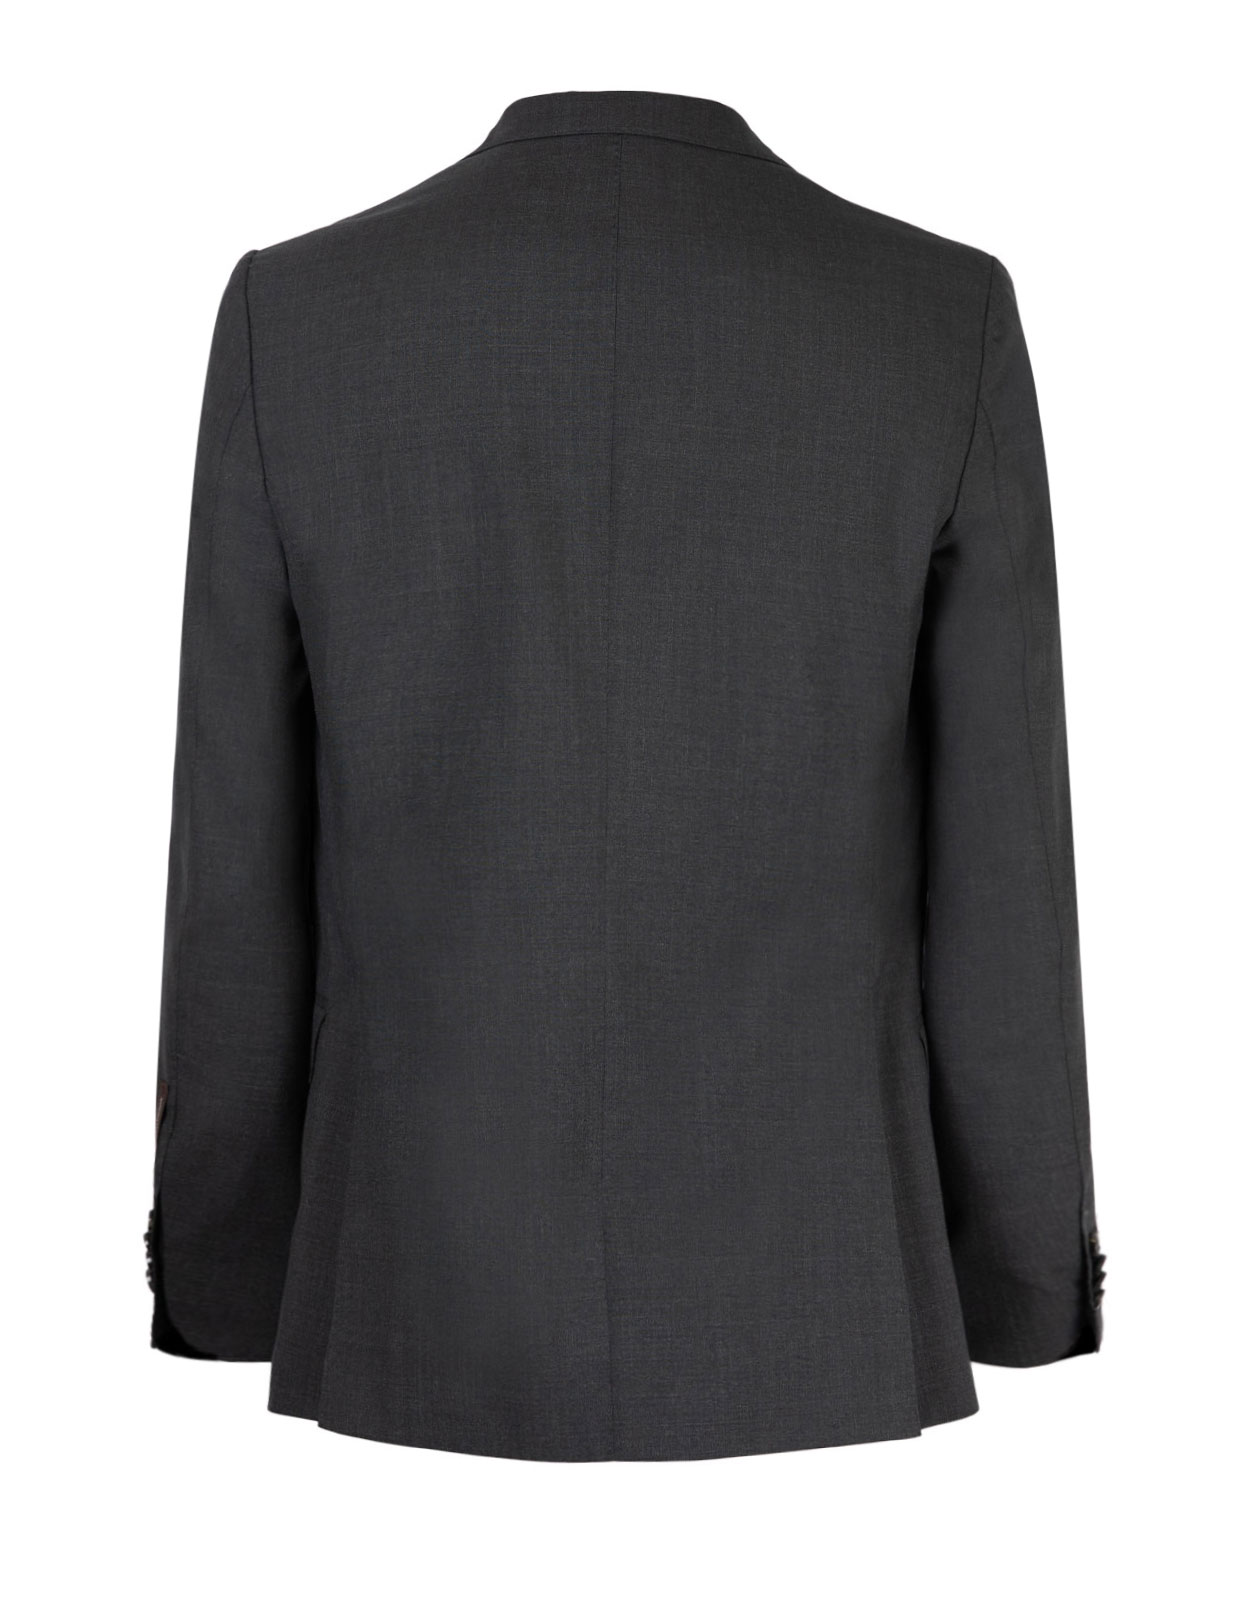 Falk Suit Jacket Regular Fit Mix & Match Wool Dark Grey Stl 154